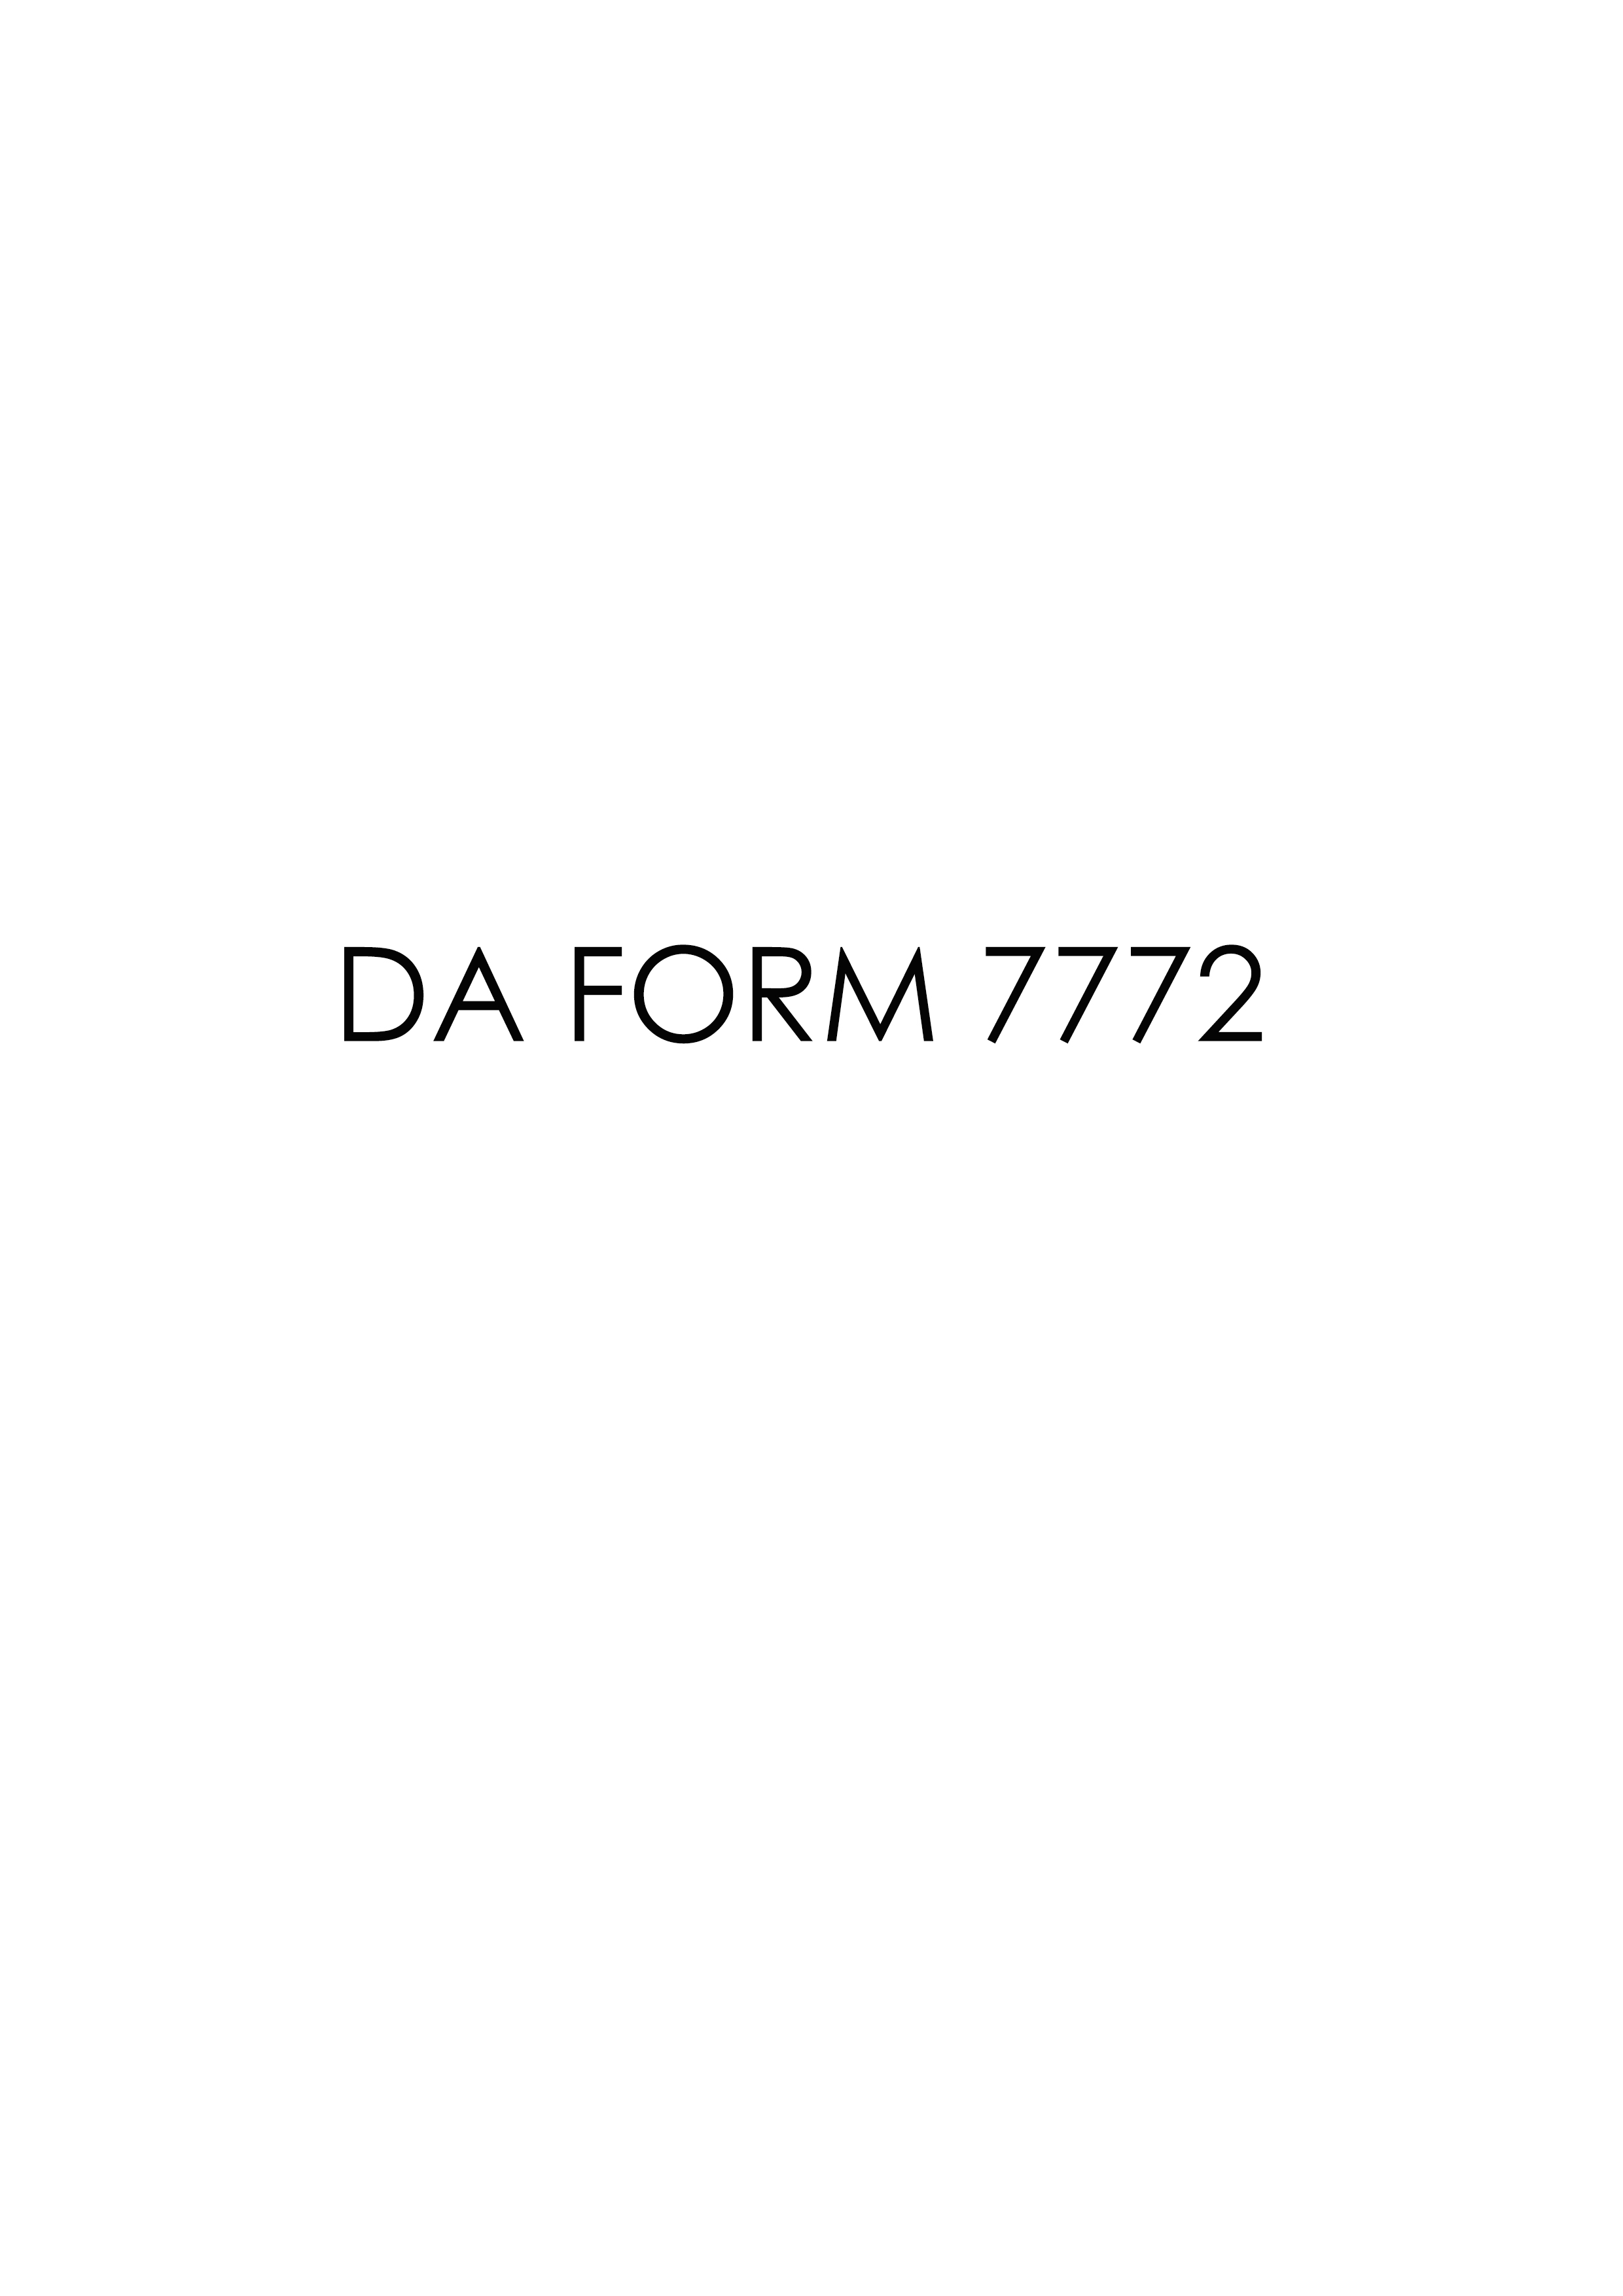 Download da 7772 Form